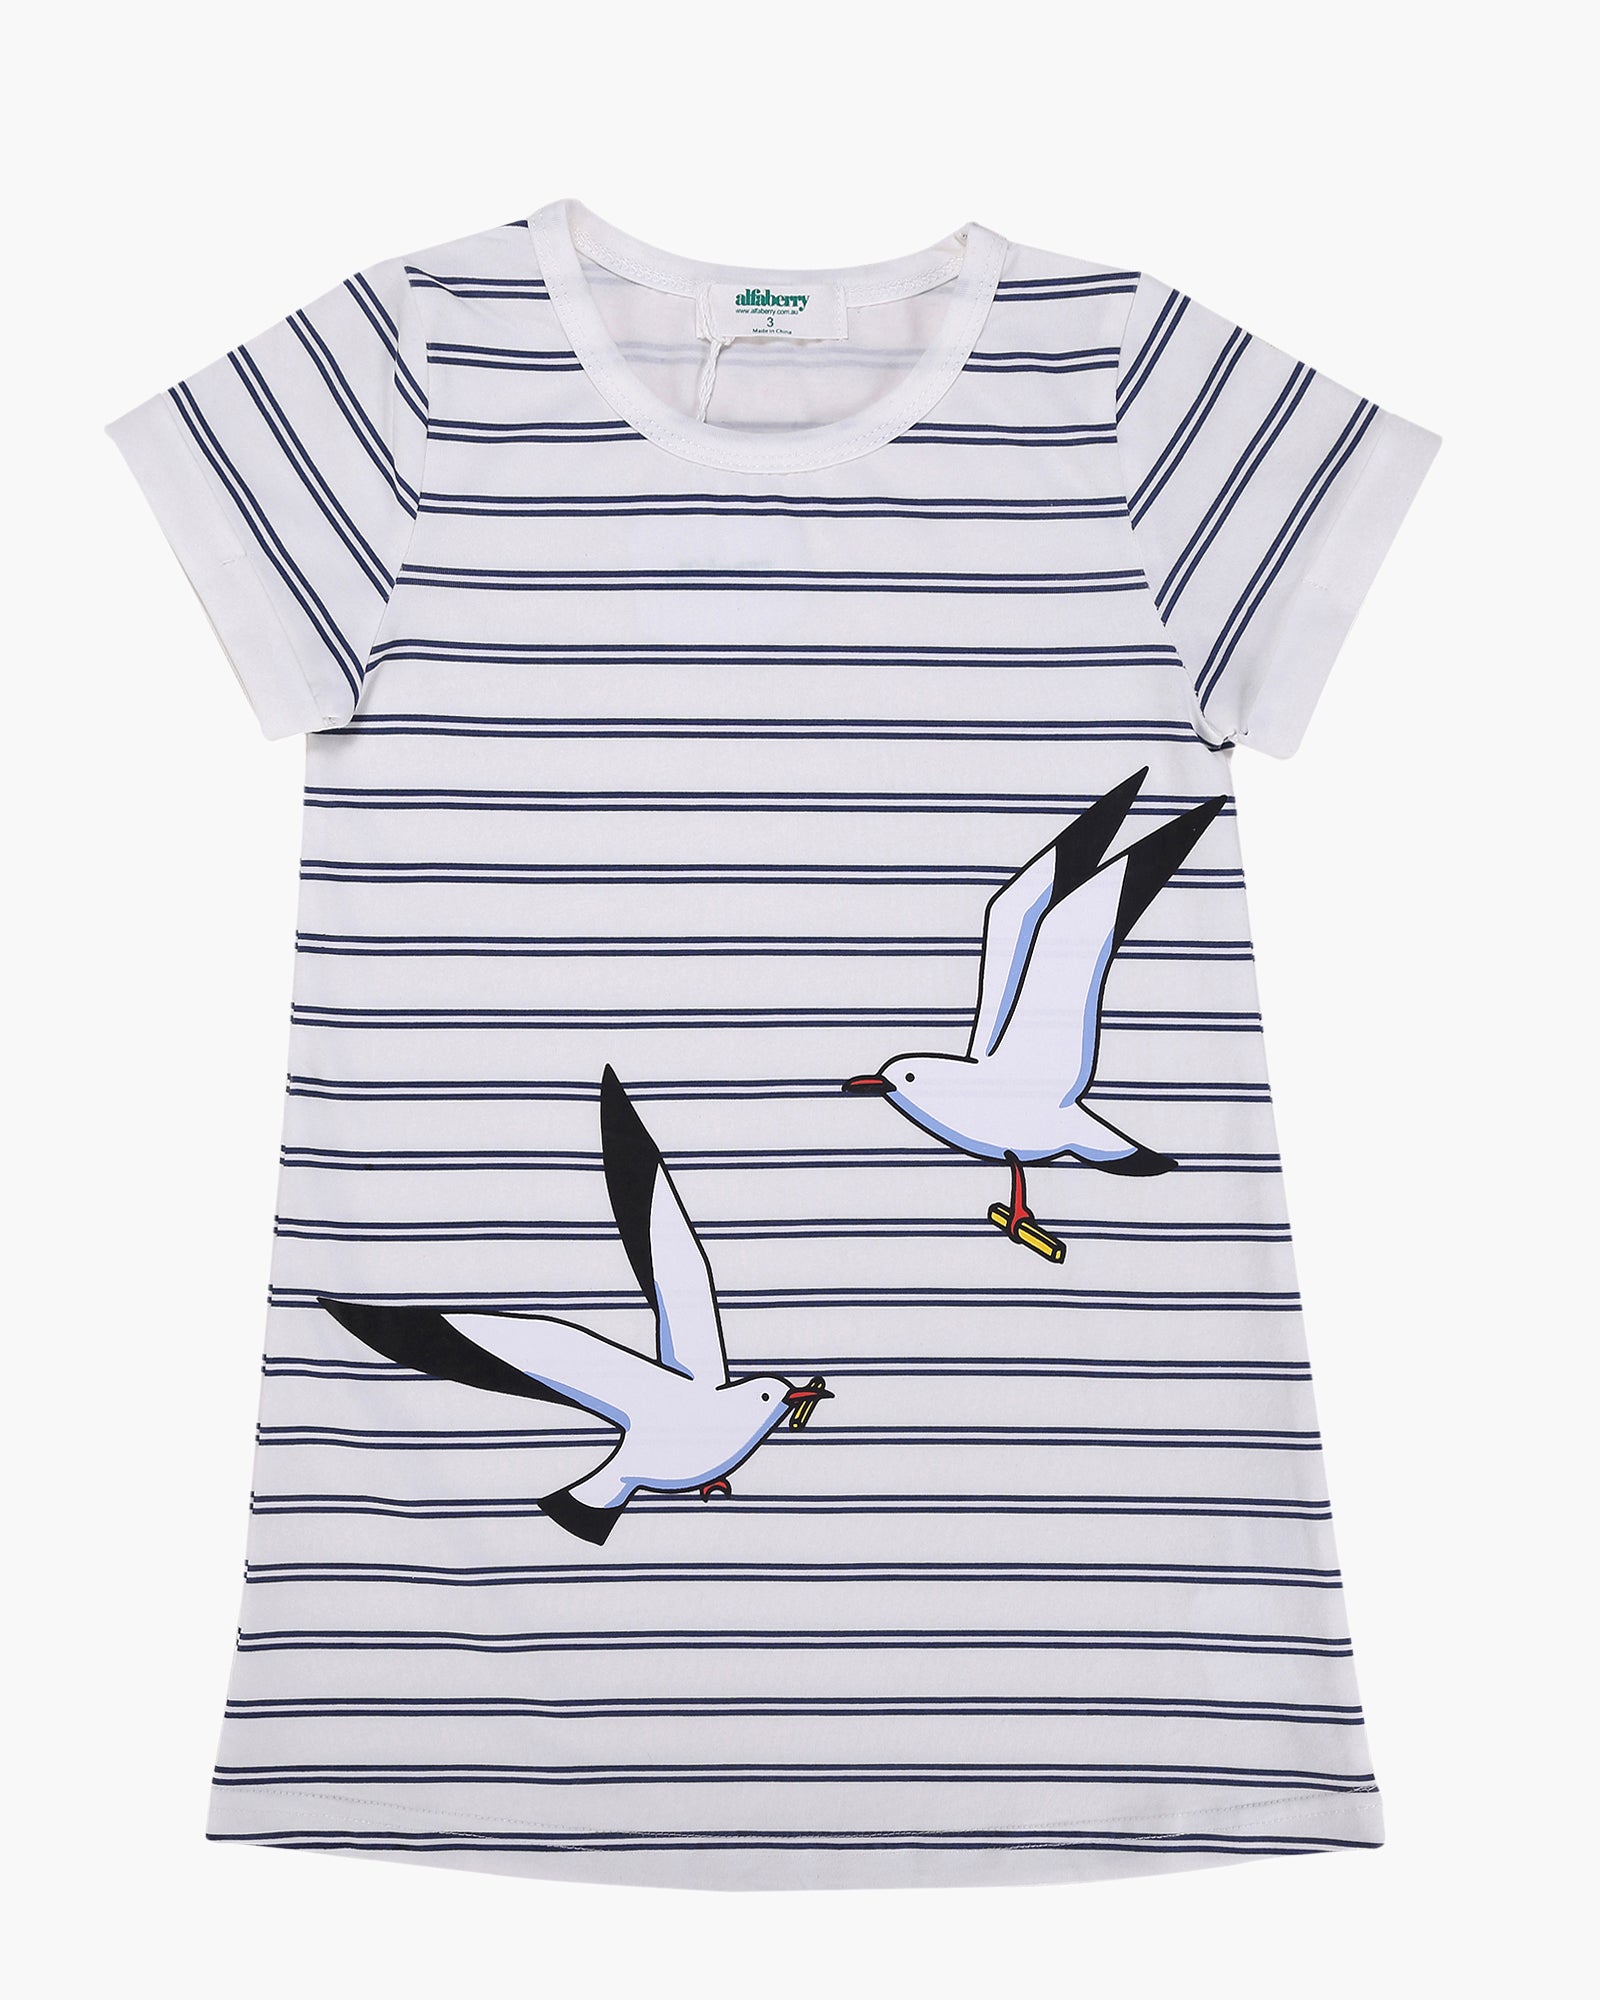 T-Shirt Dress in Seagulls & Stripes Print Navy Front